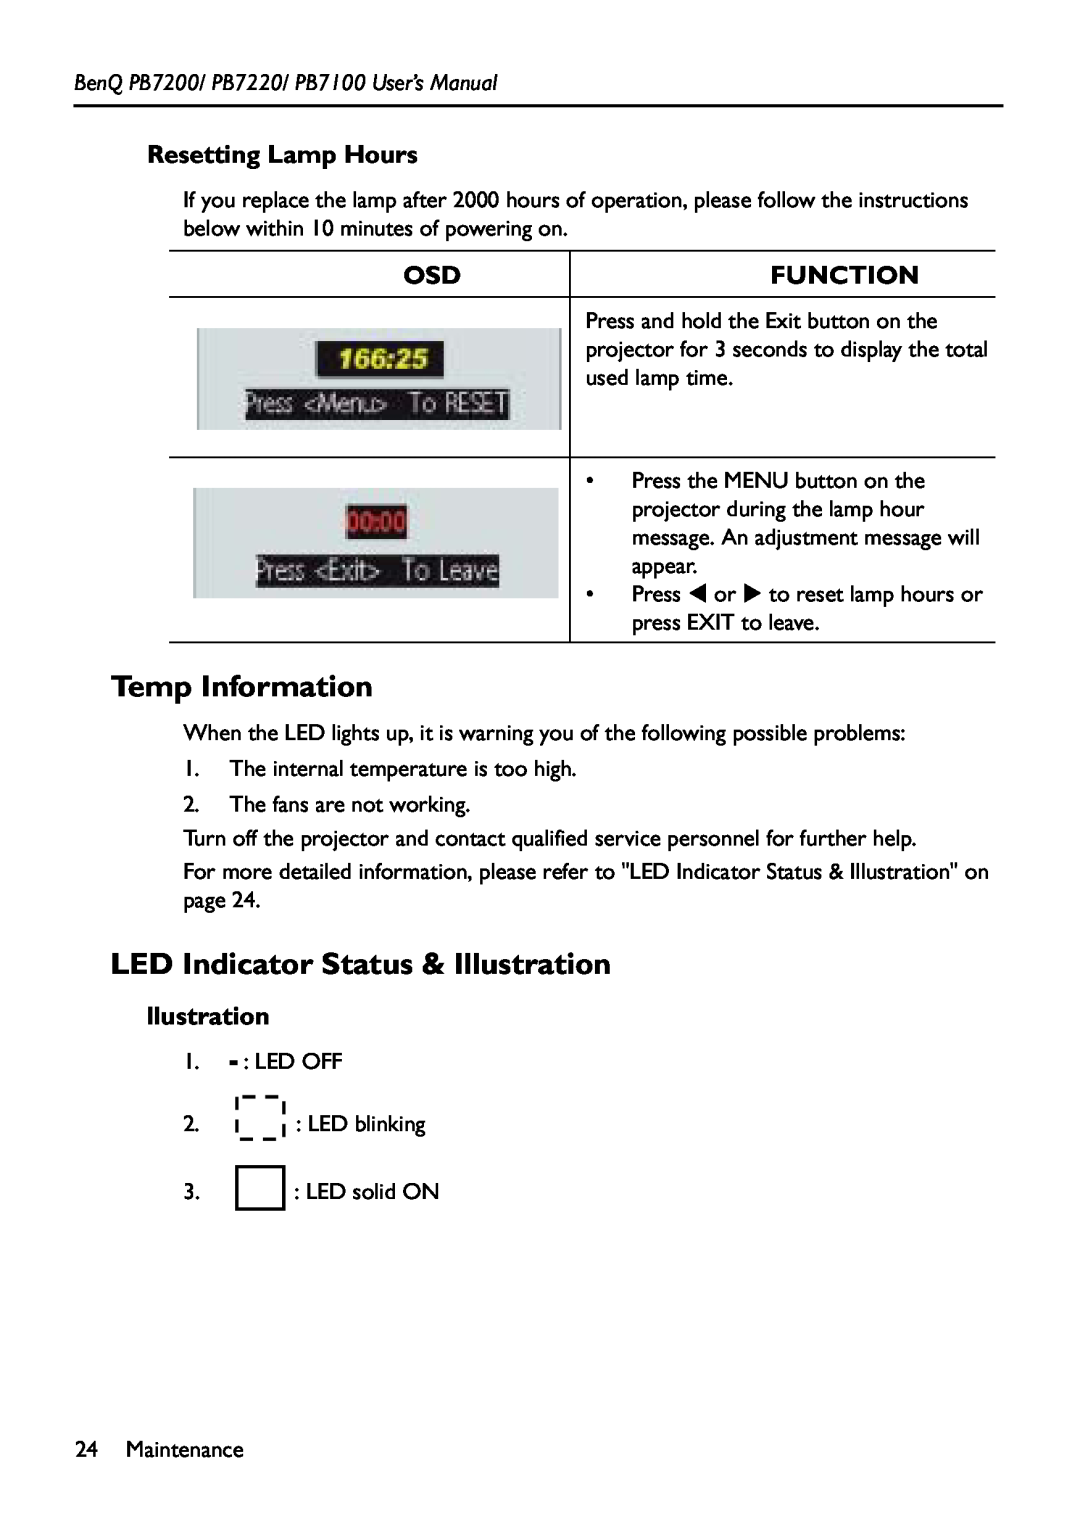 BenQ PB7200 manual Temp Information, LED Indicator Status & Illustration, Resetting Lamp Hours, Function 